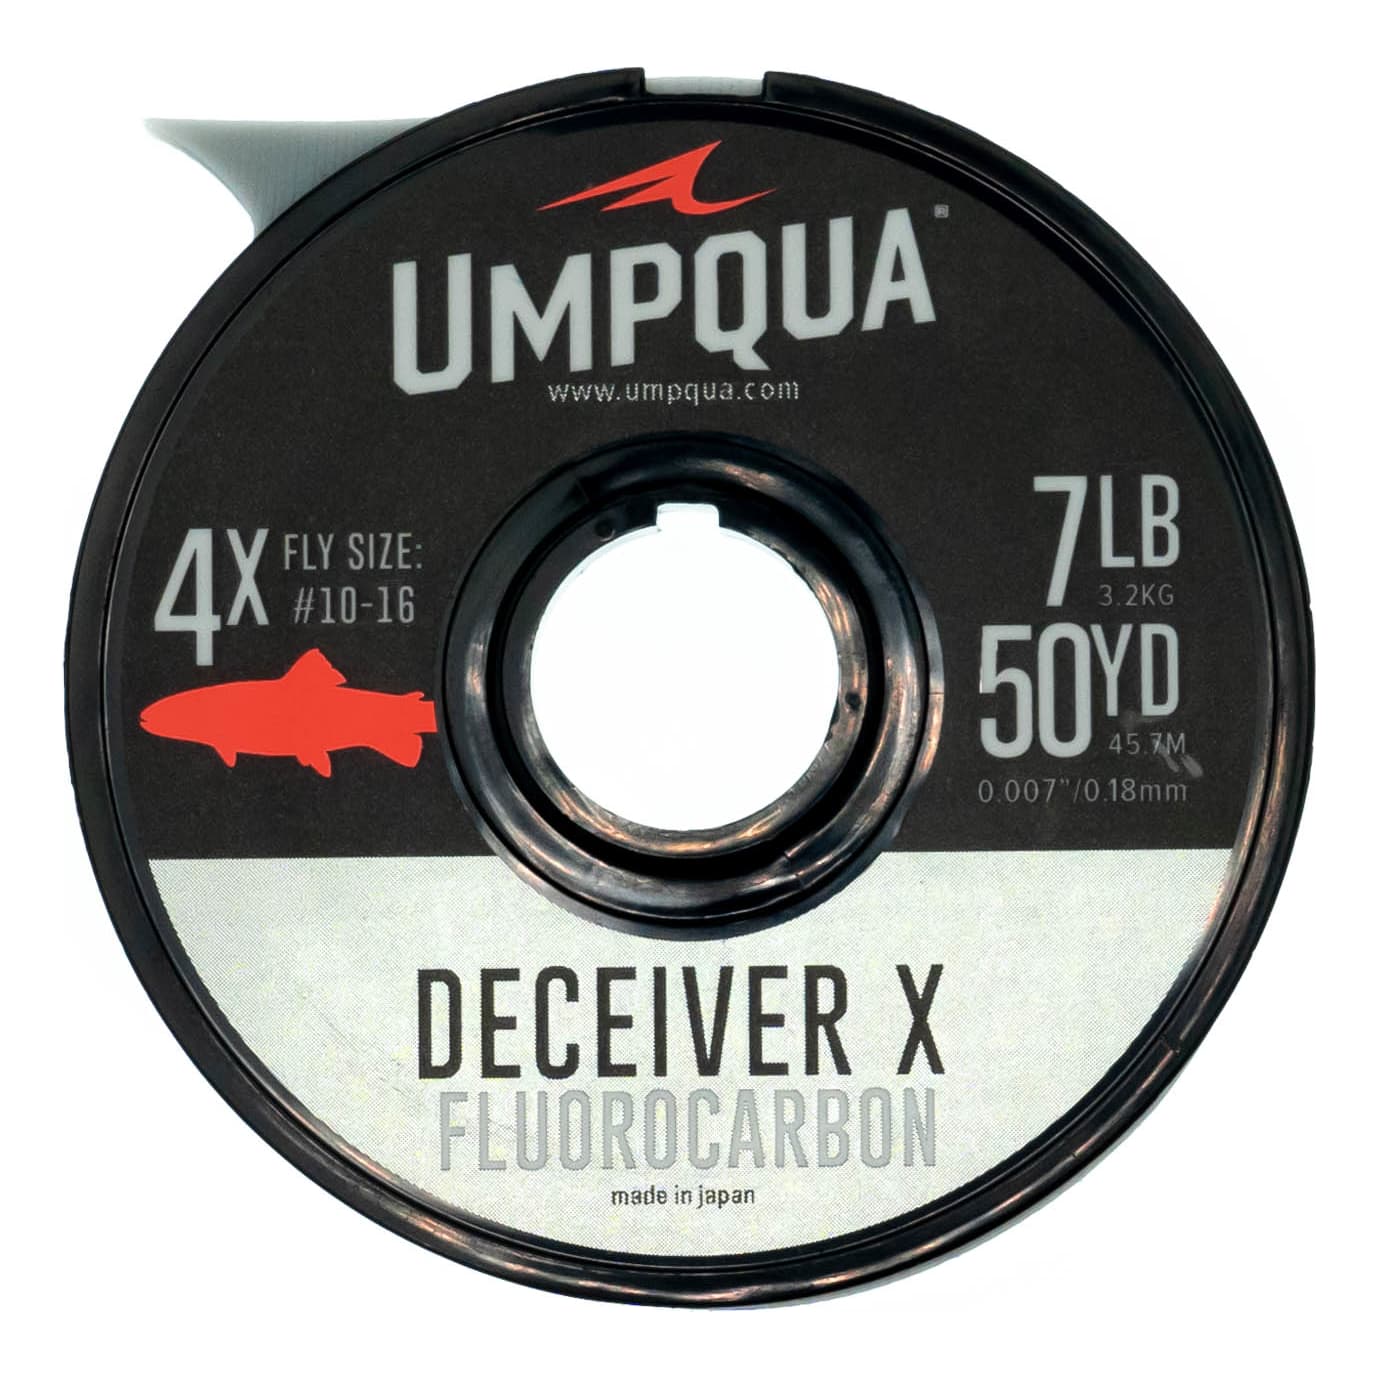 Umpqua Deceiver X Fluorocarbon Tippet, 0X